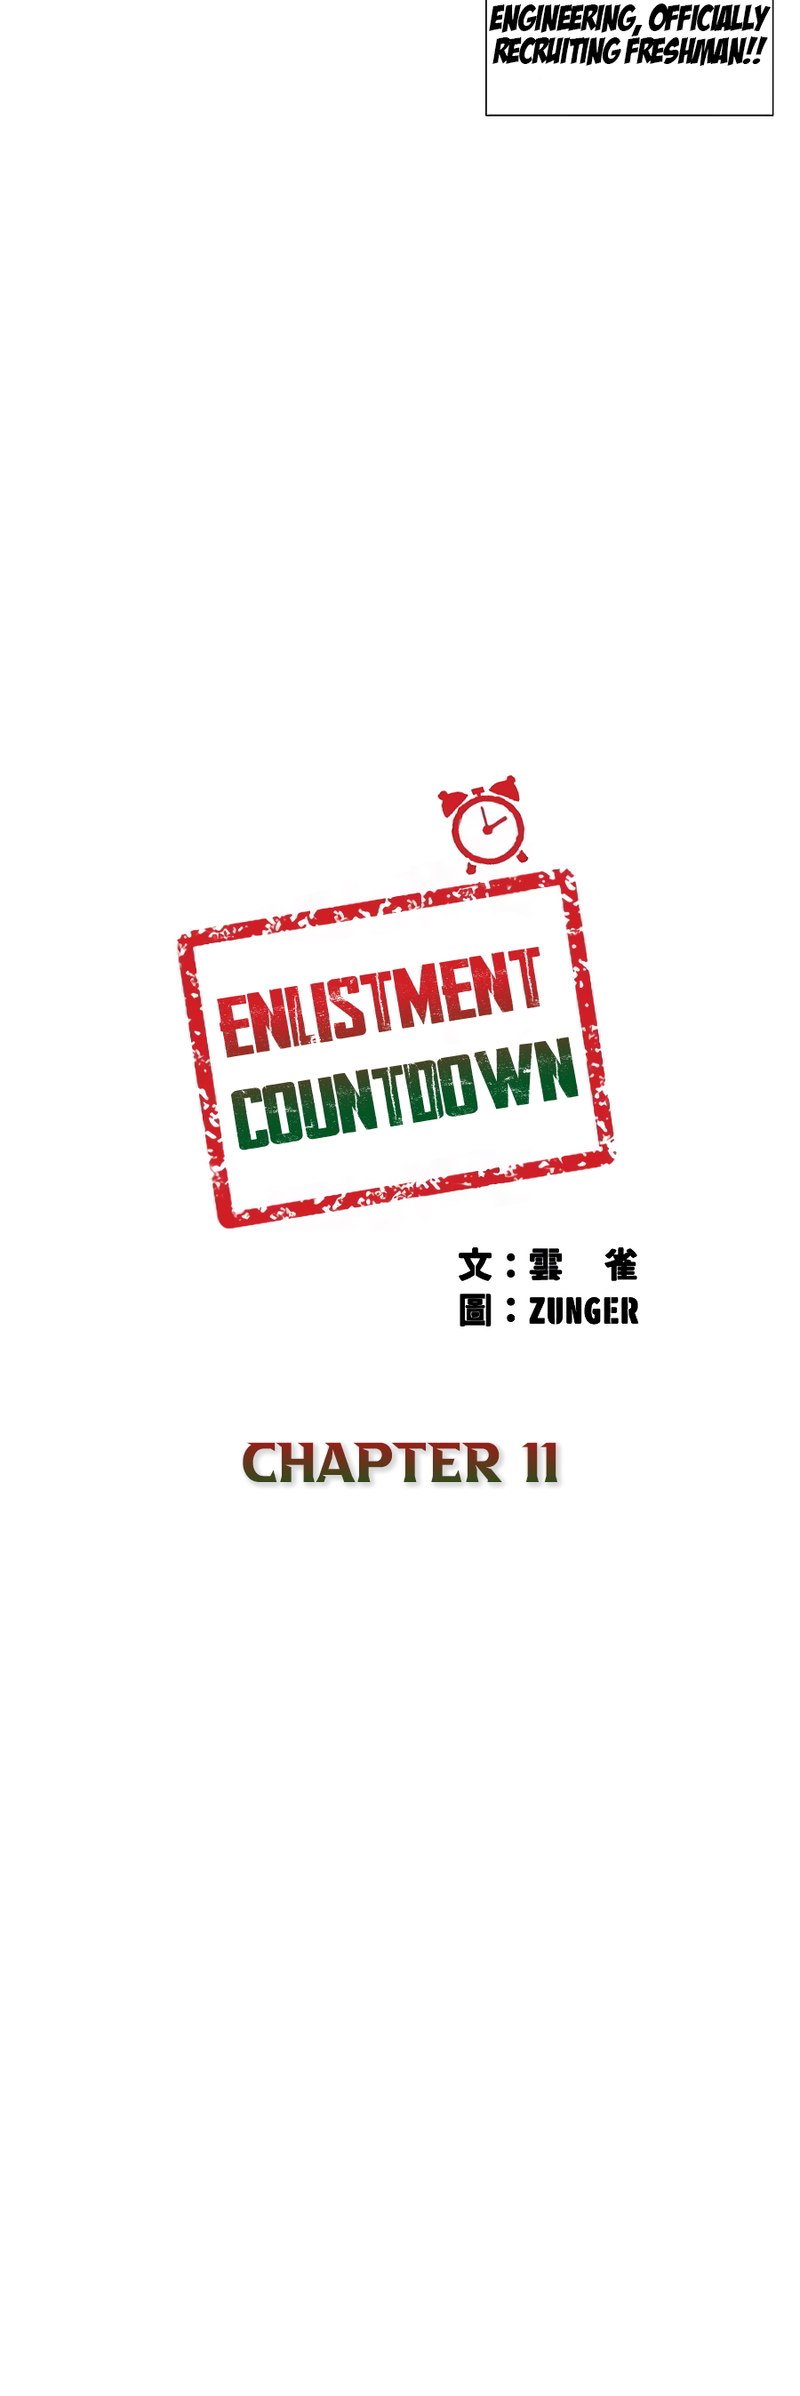 enlistment-countdown-chap-11-2